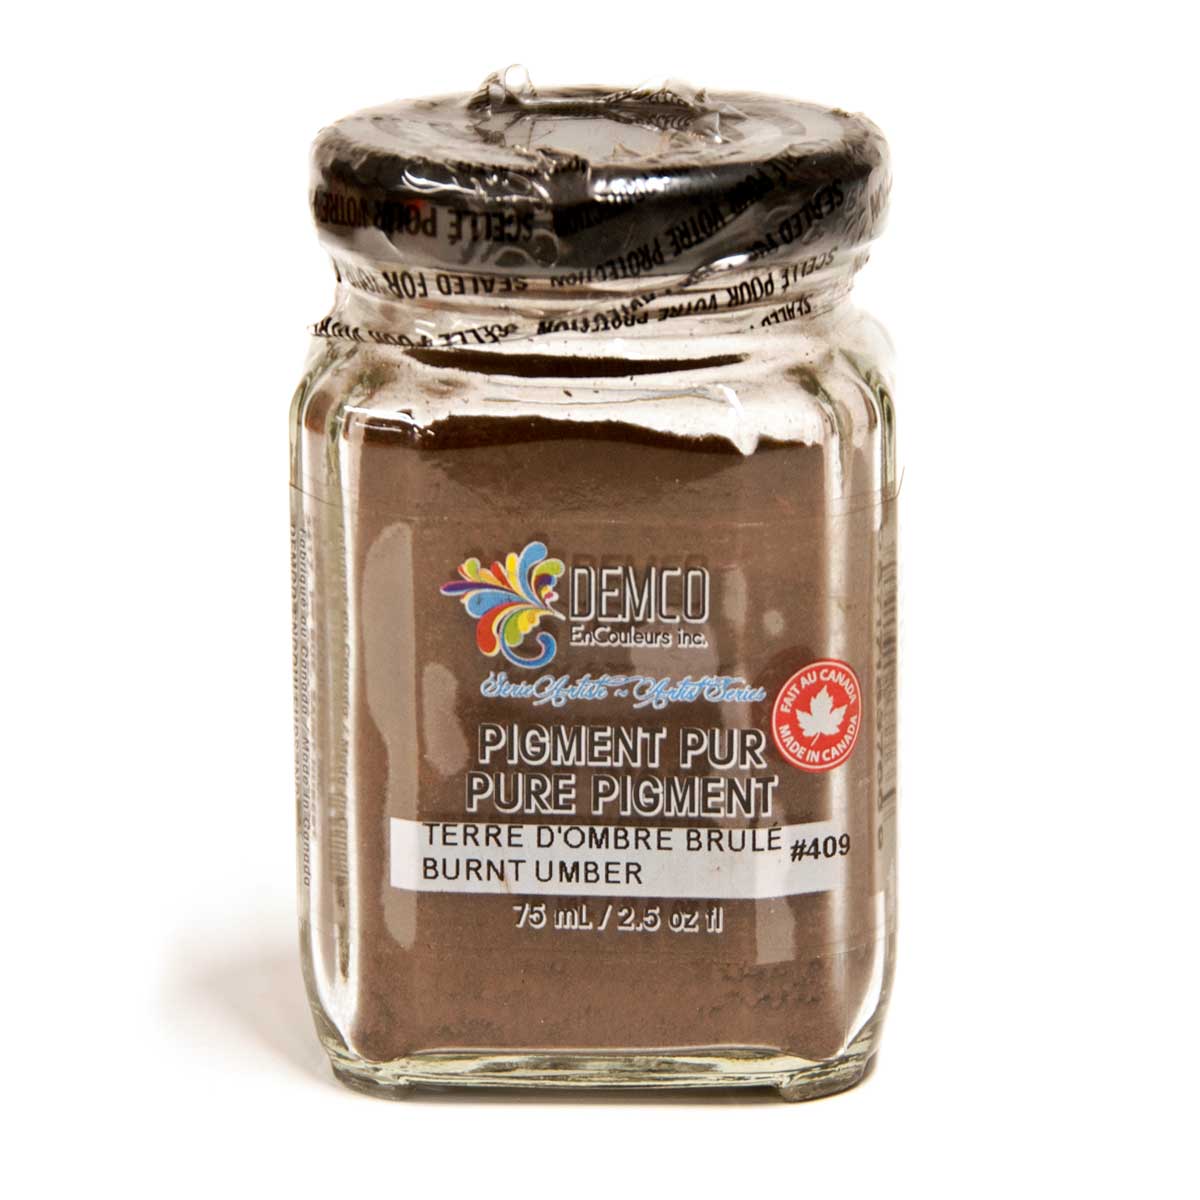 Demco Pure Pigment Artist Series 1 - Burnt Umber 75 ml